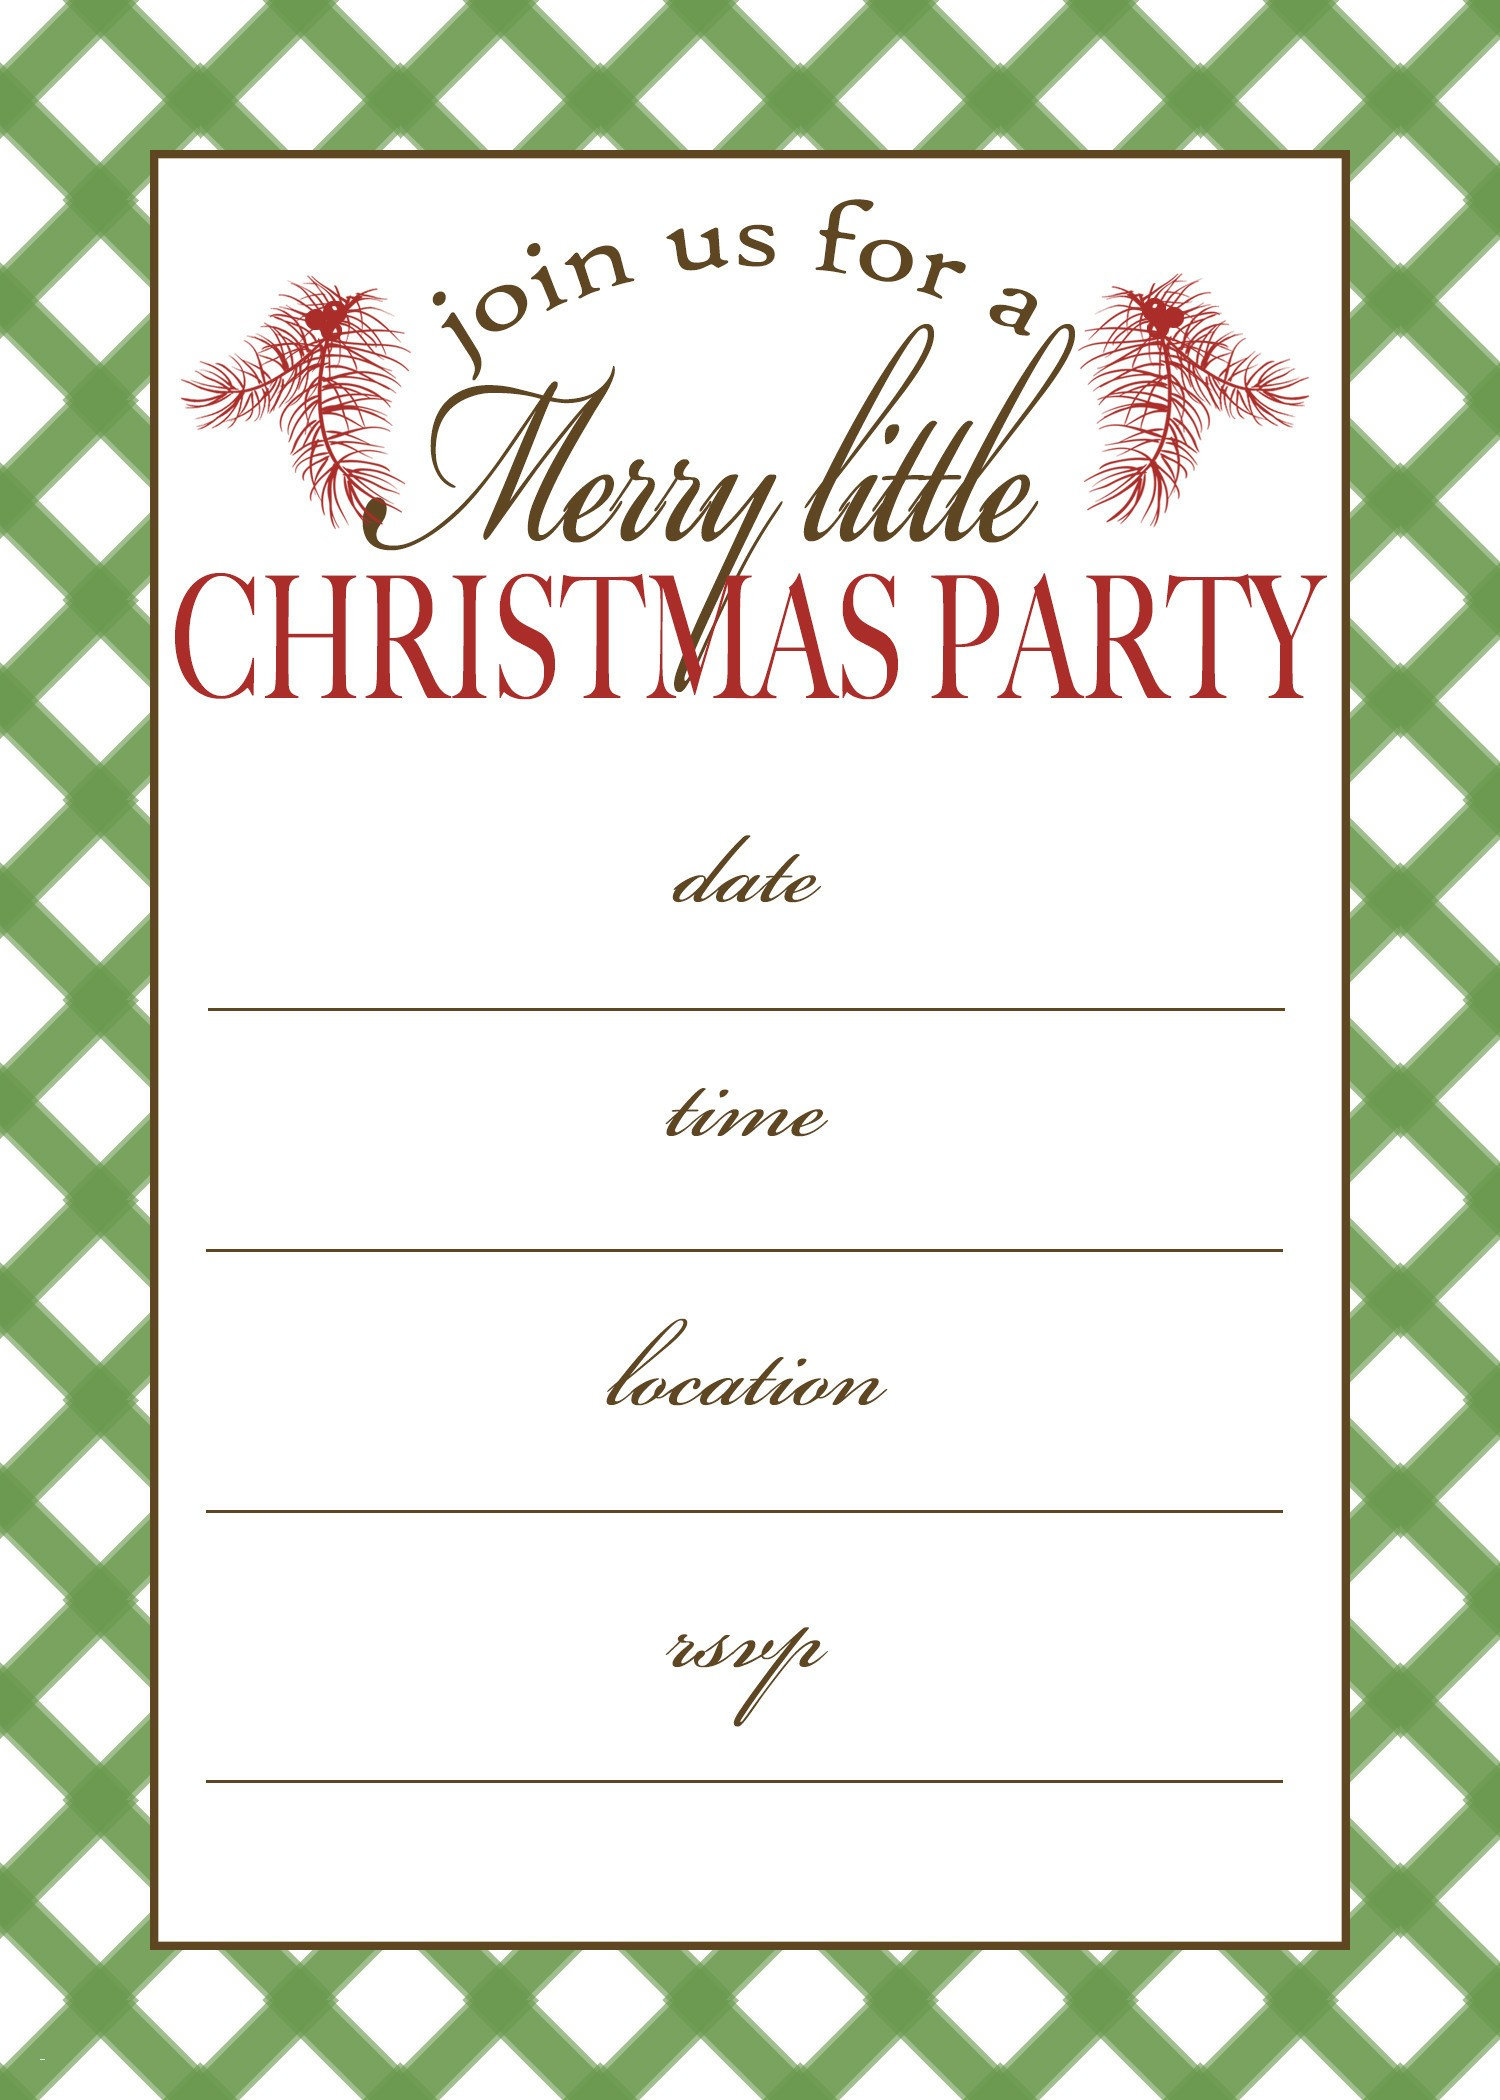 Free Printable Christmas Party Flyer Templates Invitation Valid - Free Printable Christmas Party Flyer Templates